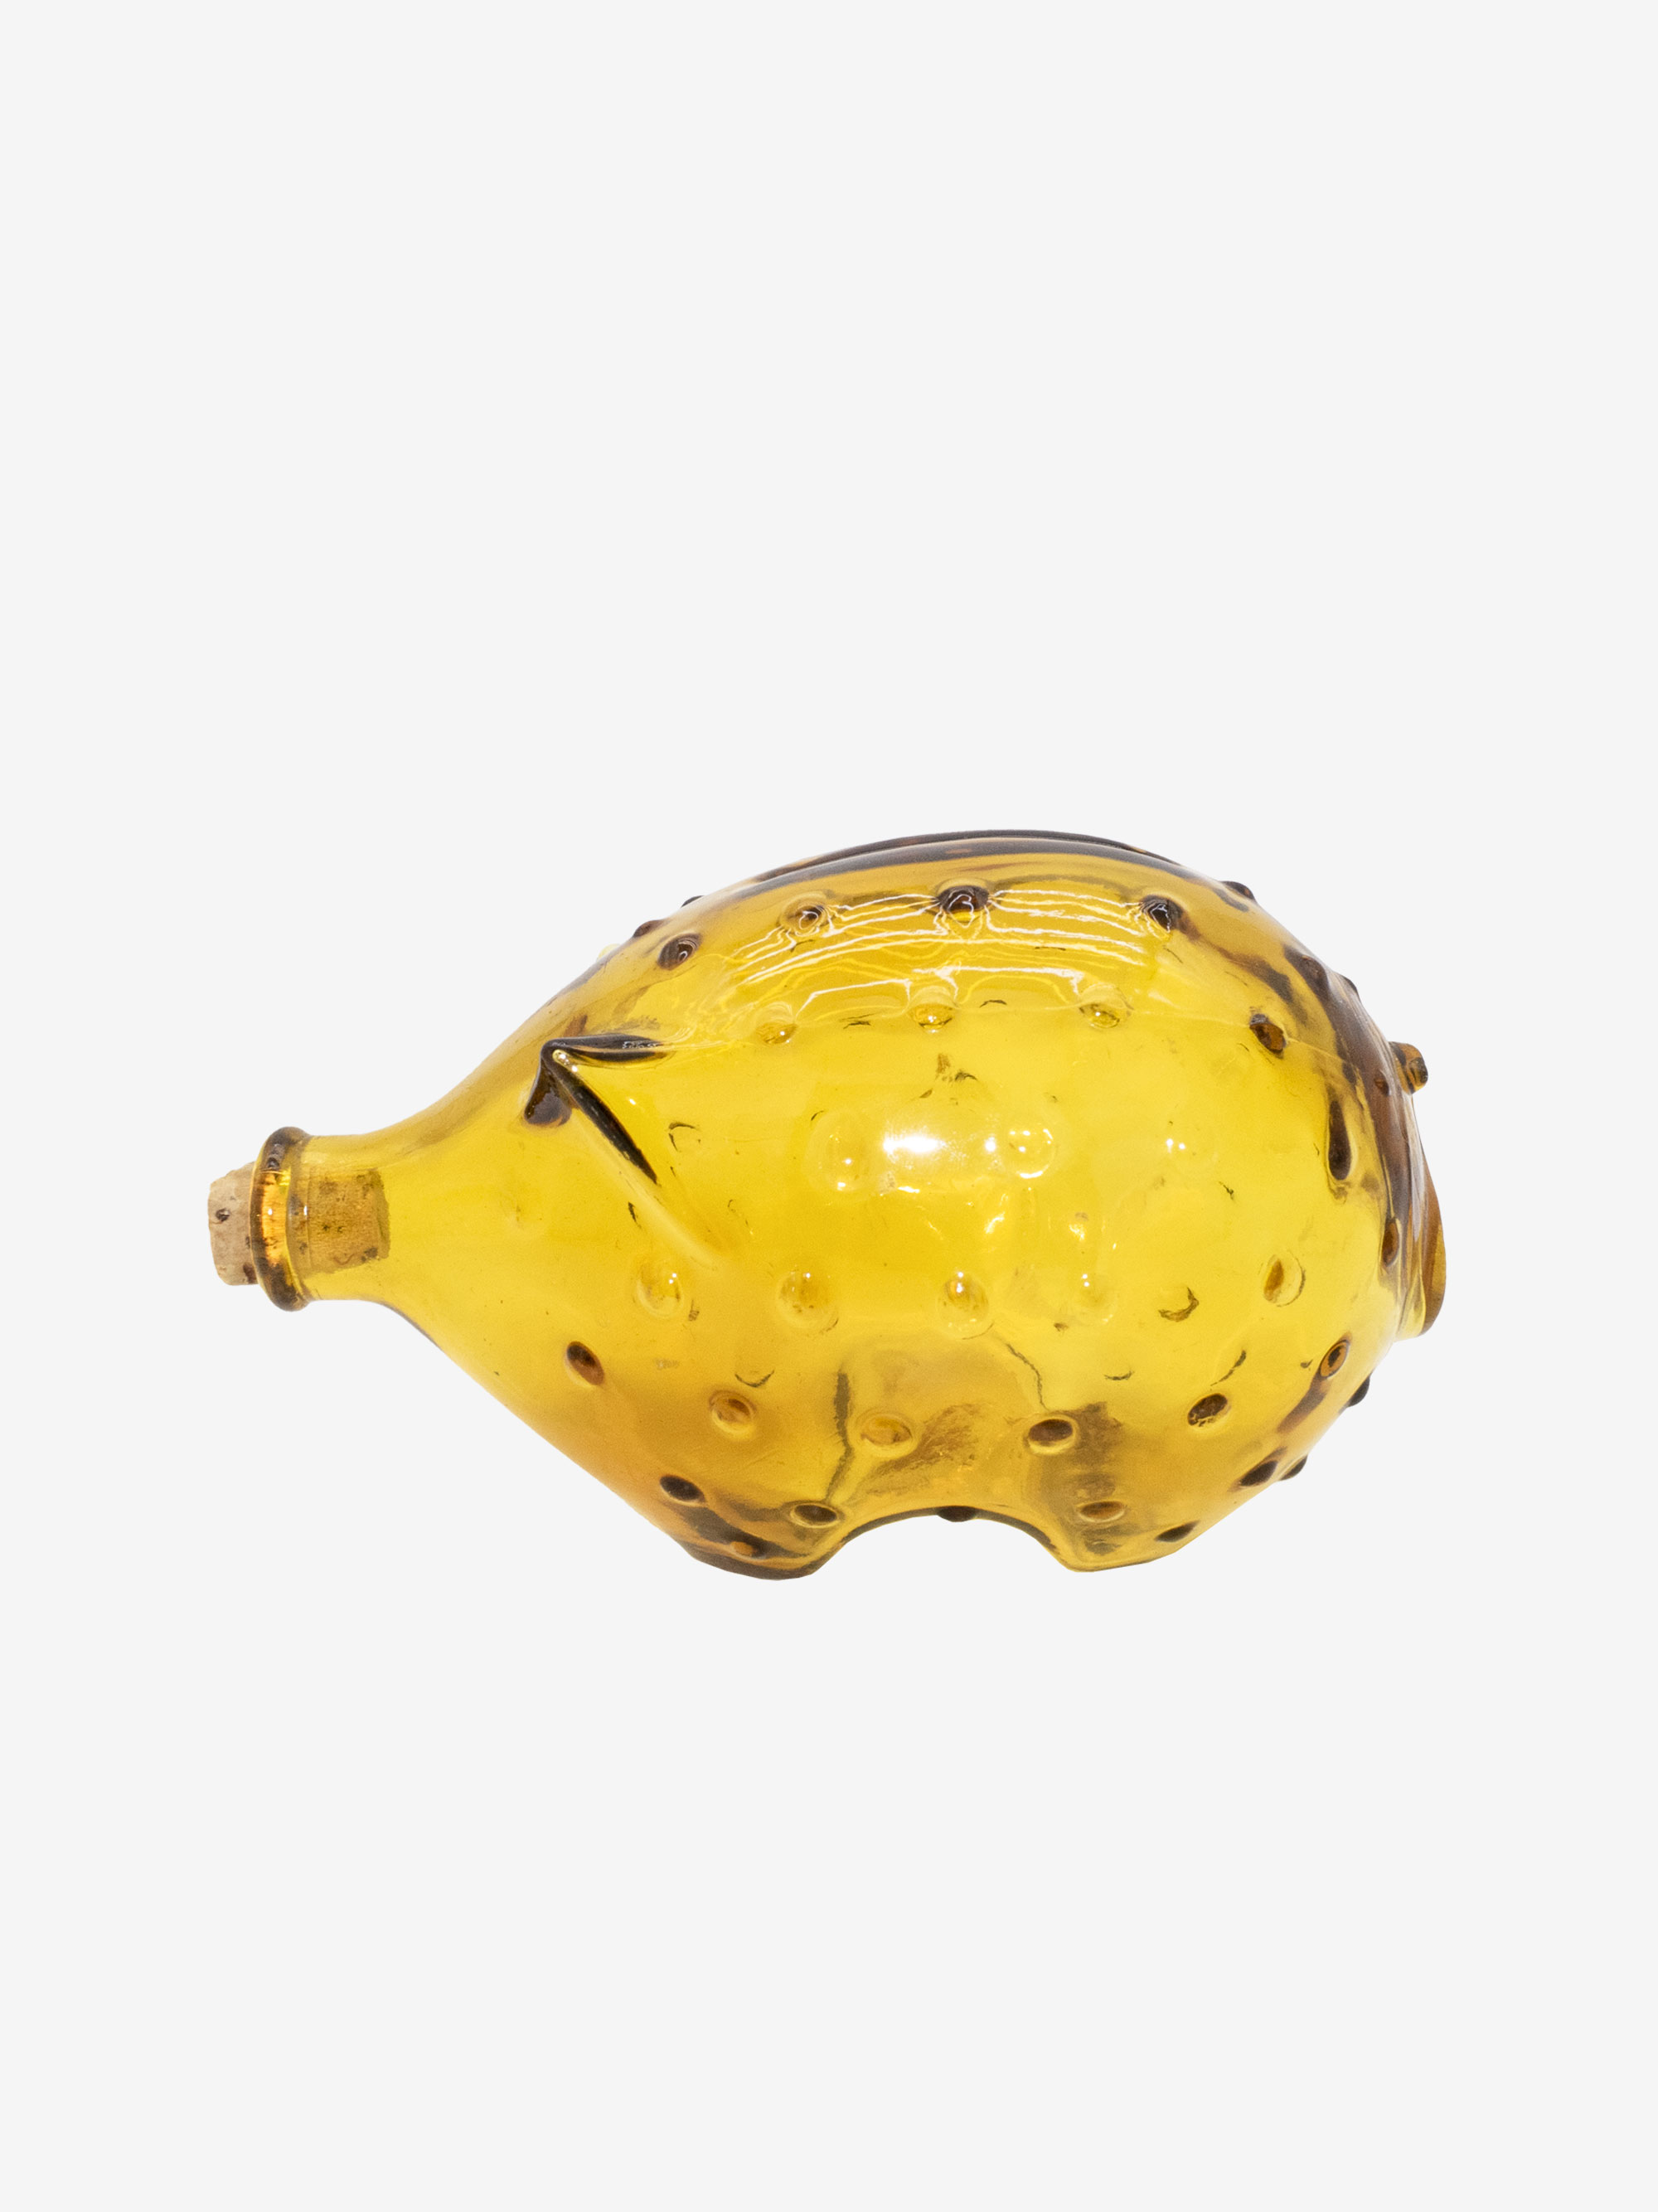 [RENTAL] Amber Glass Pig Bottle